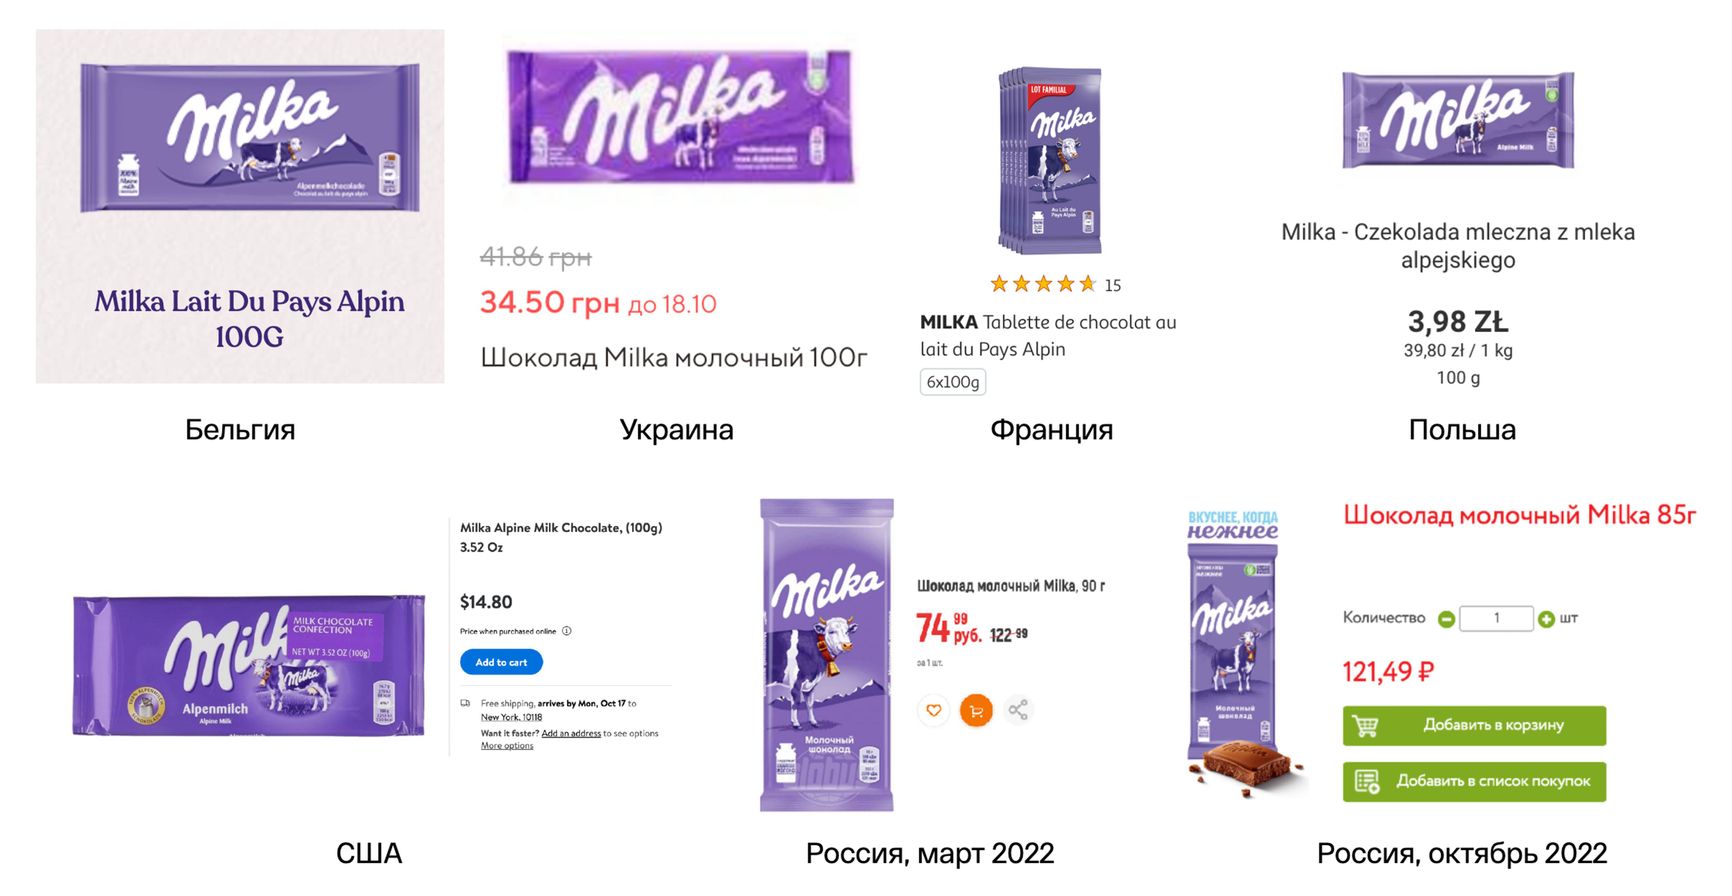 Screenshots: the online catalogs of Globus, O’KEY (Russia), Auchan (Poland, France, Ukraine), Walmart (USA), and the manufacturer's official website (Belgium)